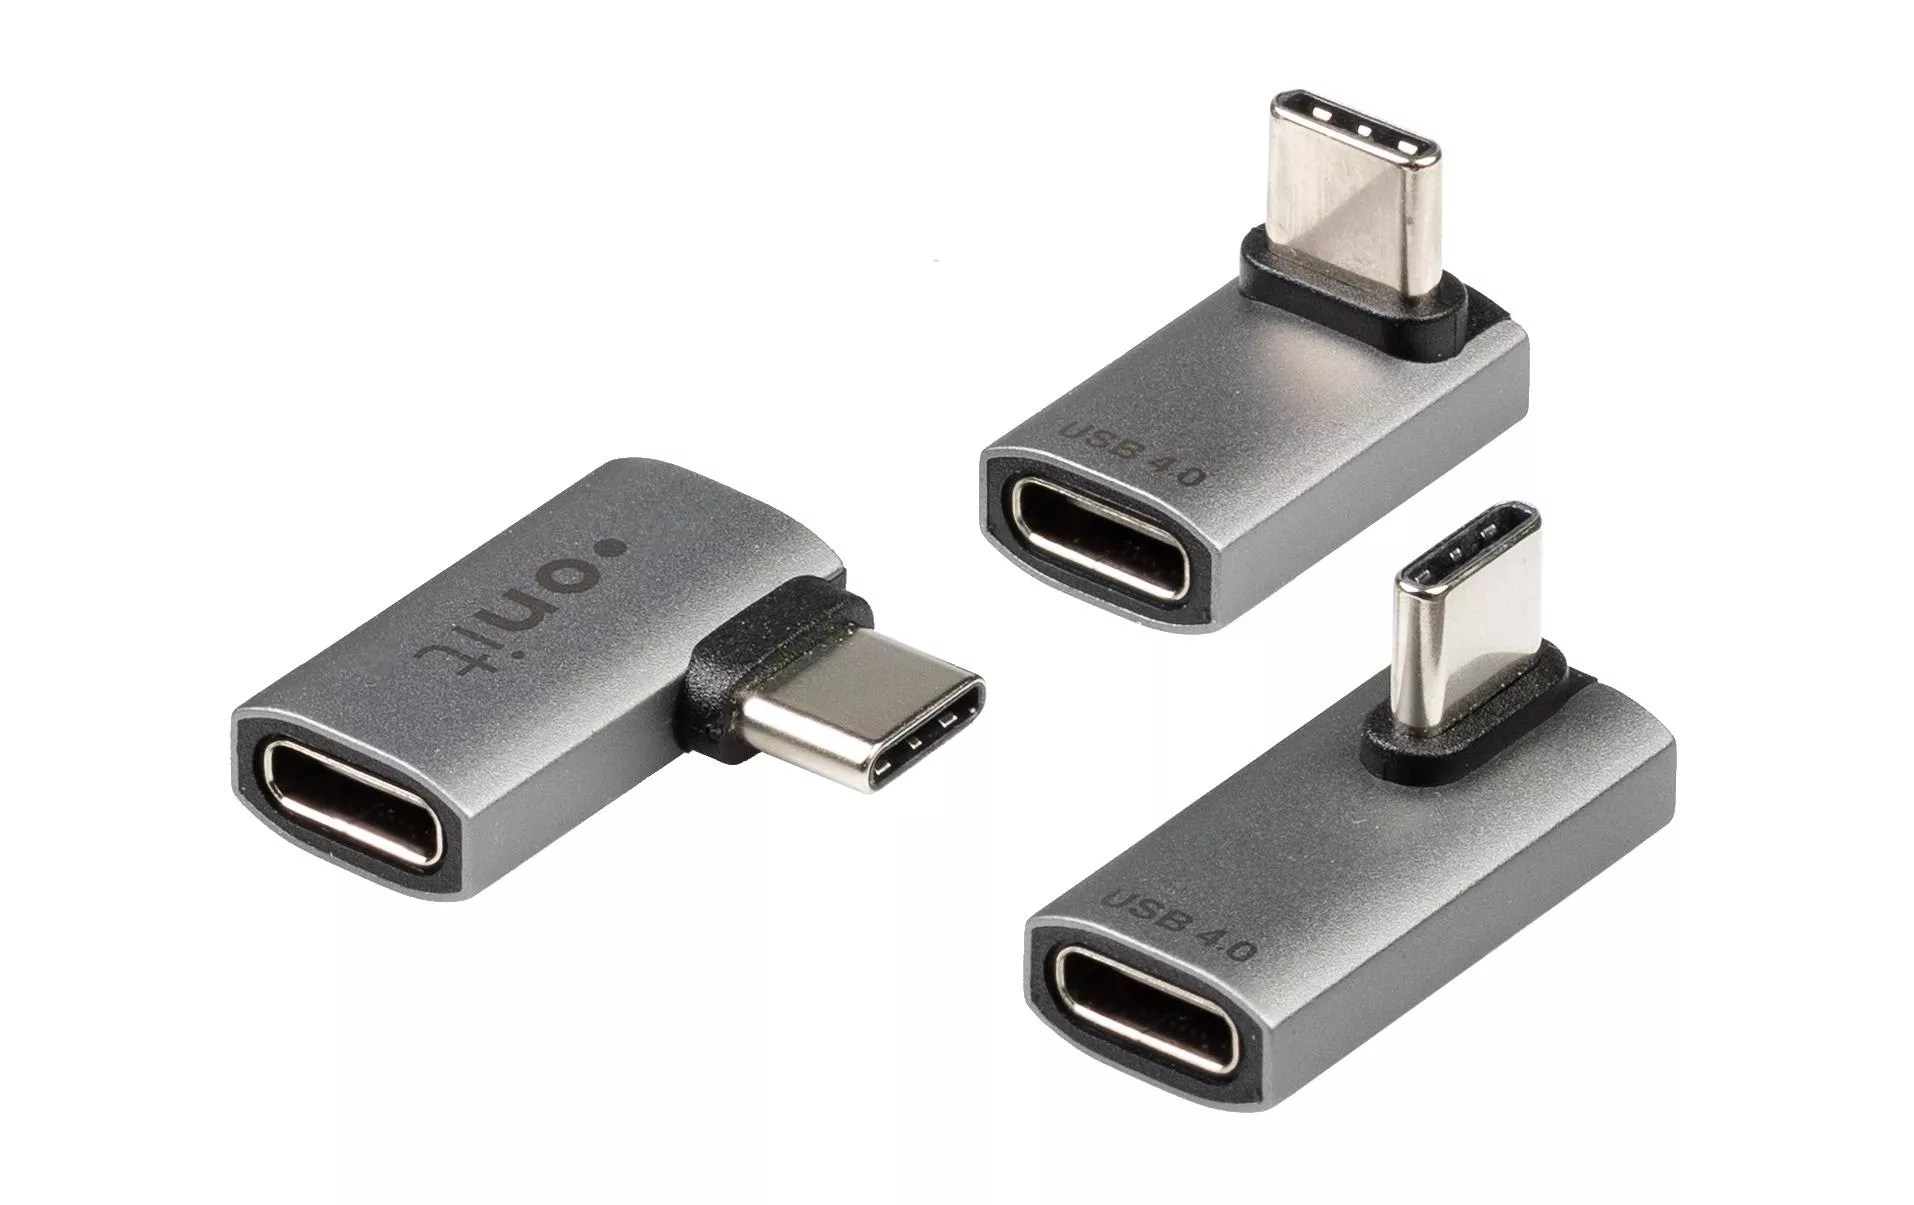 Adattatore USB onit spina USB-C angolata - presa USB-C, 3 pezzi